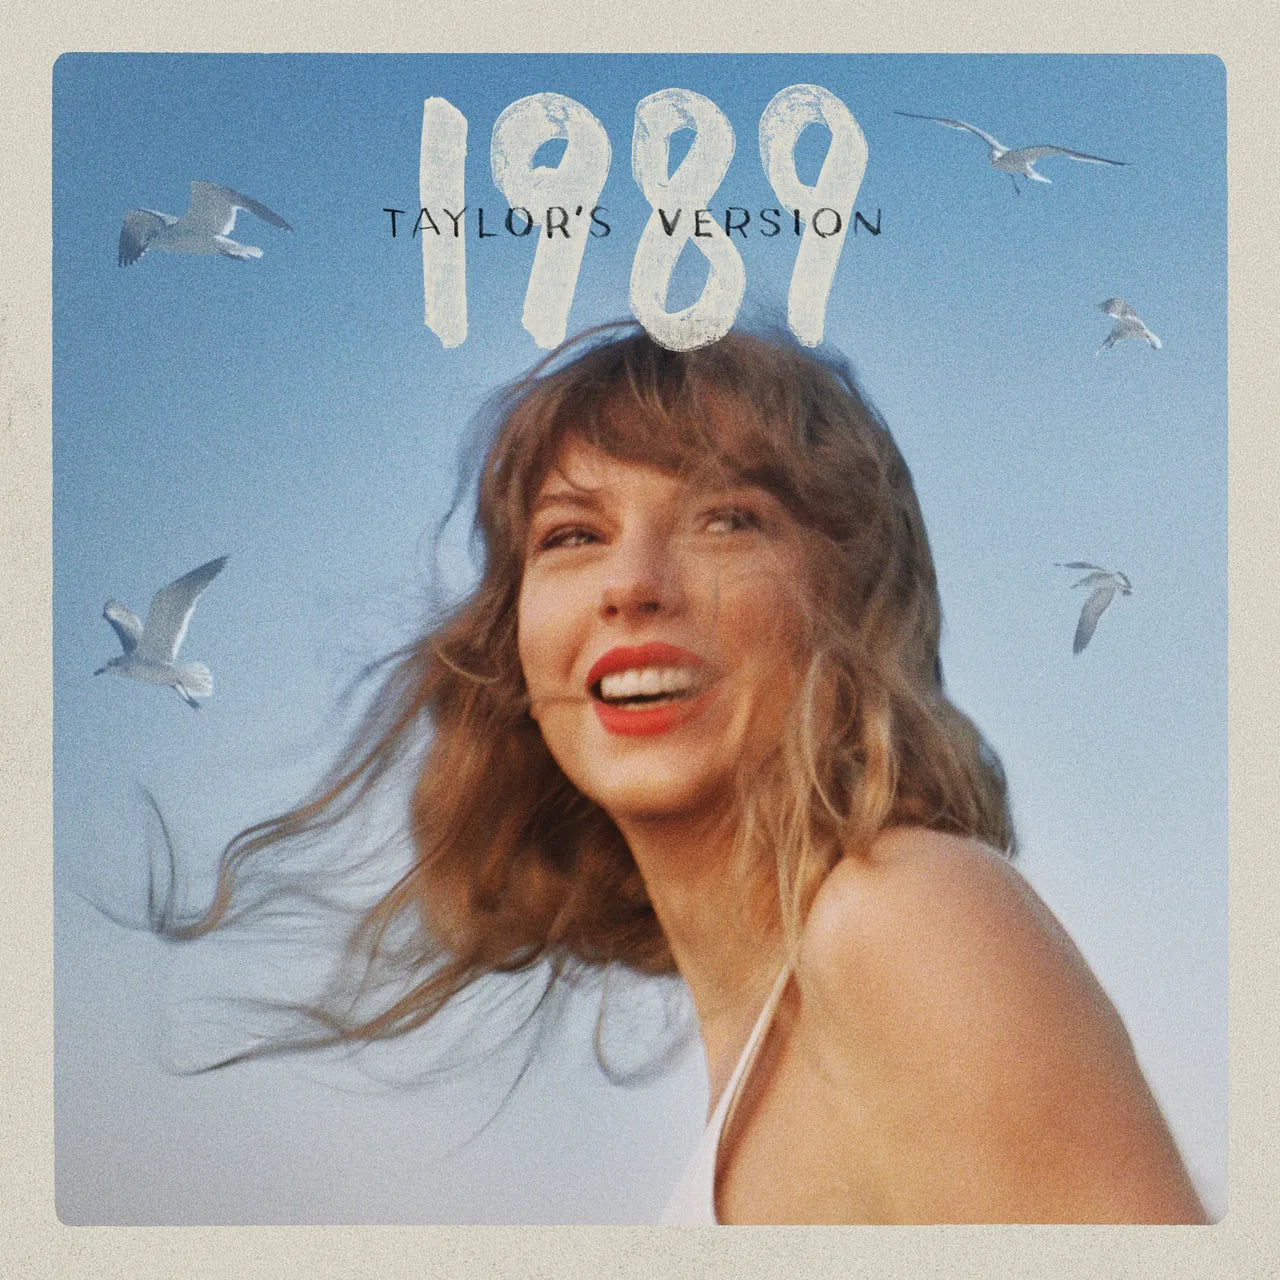 Taylor Swift - 1989 Taylor's Version (Crystal Skies Blue Edition Vinyl 2LP)